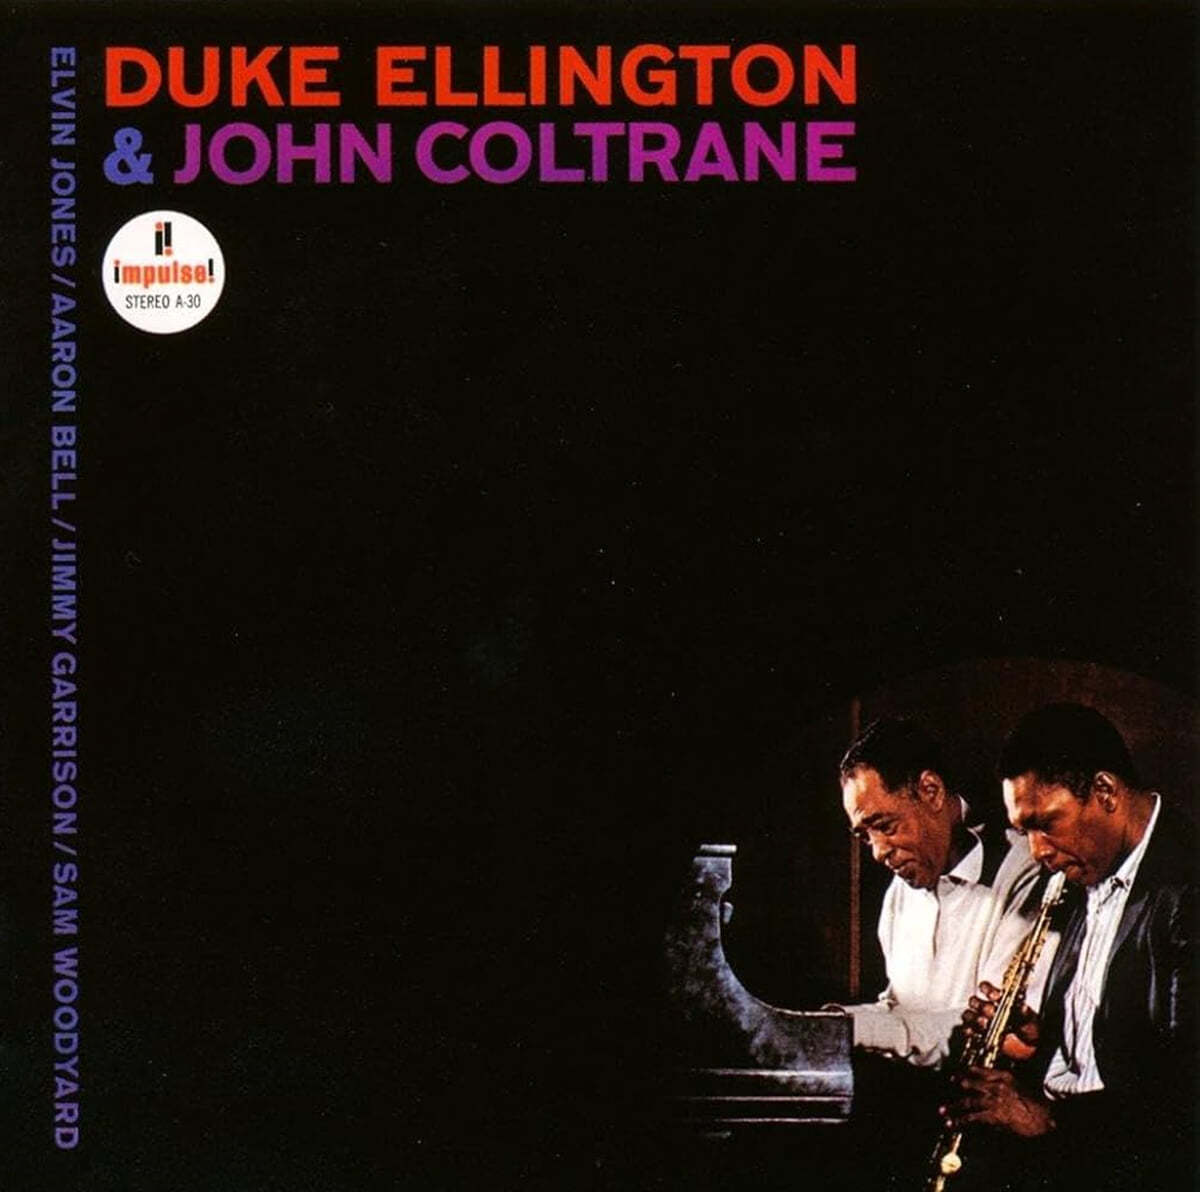 Duke Ellington / John Coltrane (듀크 엘링턴 / 존 콜트레인) - Duke Ellington &amp; John Coltrane